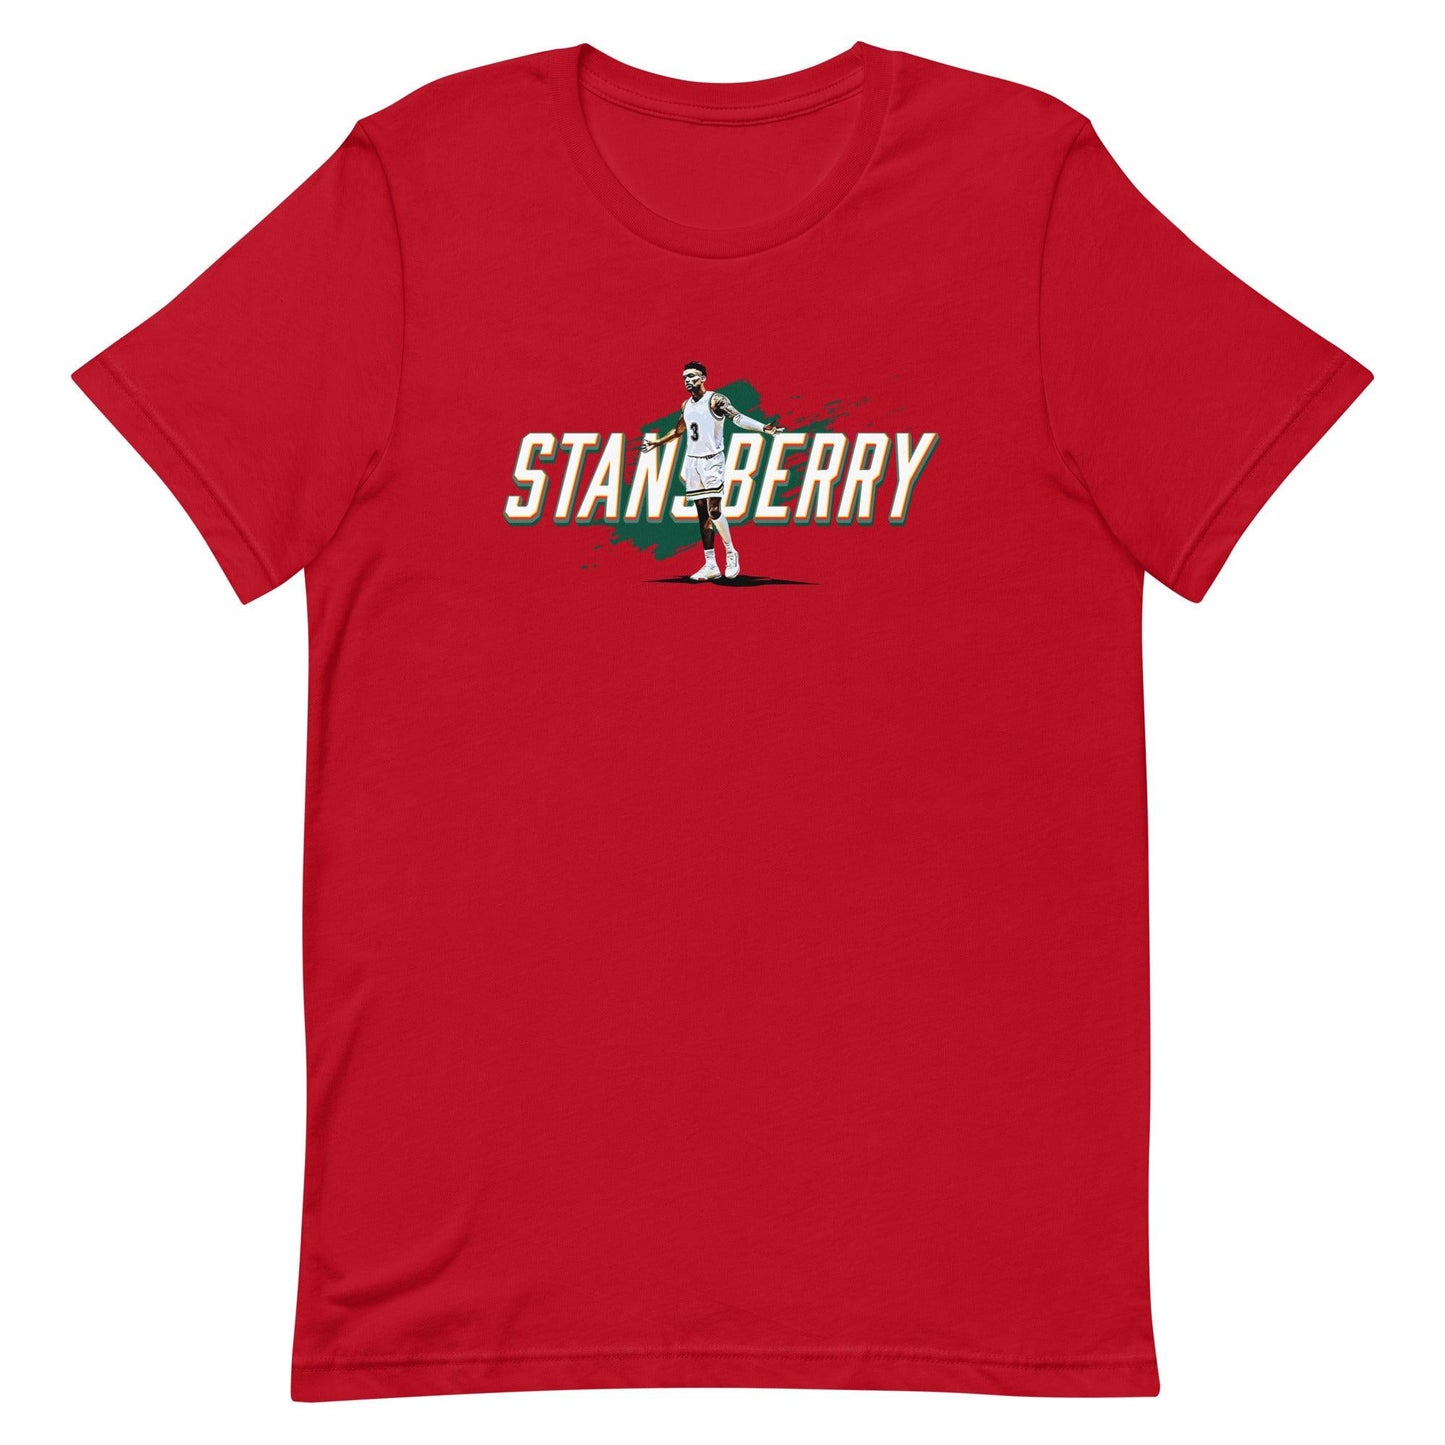 Eddie Stansberry “Essential” t-shirt - Fan Arch